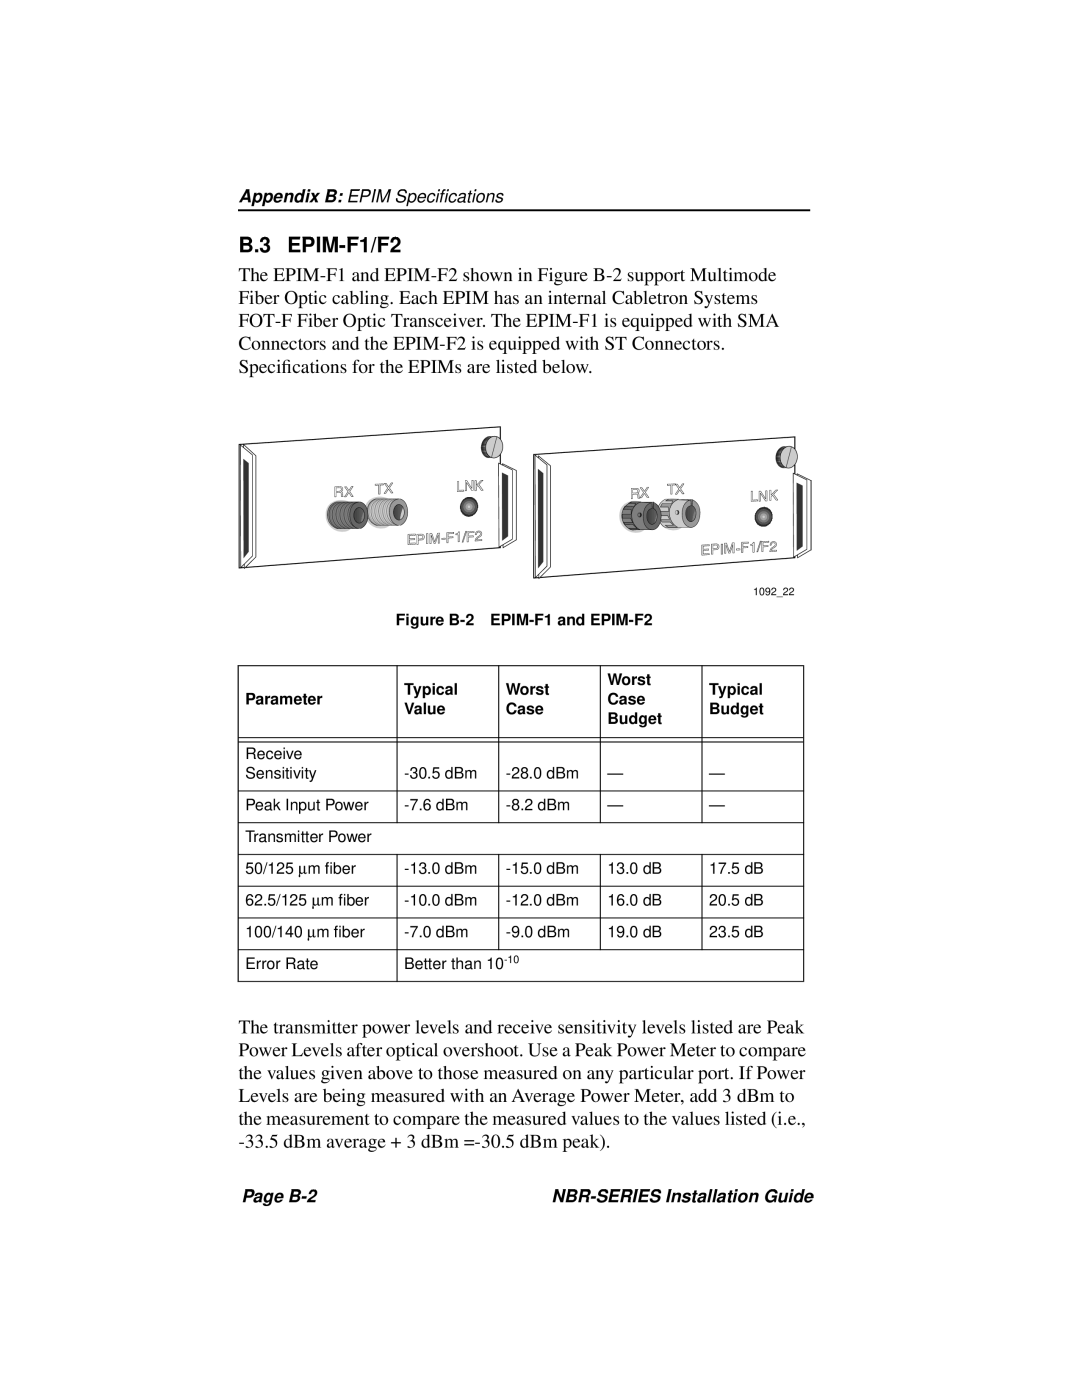 Cabletron Systems NBR-220, NBR-420, NBR-620 manual B.3 EPIM-F1/F2, Appendix B EPIM Speciﬁcations 